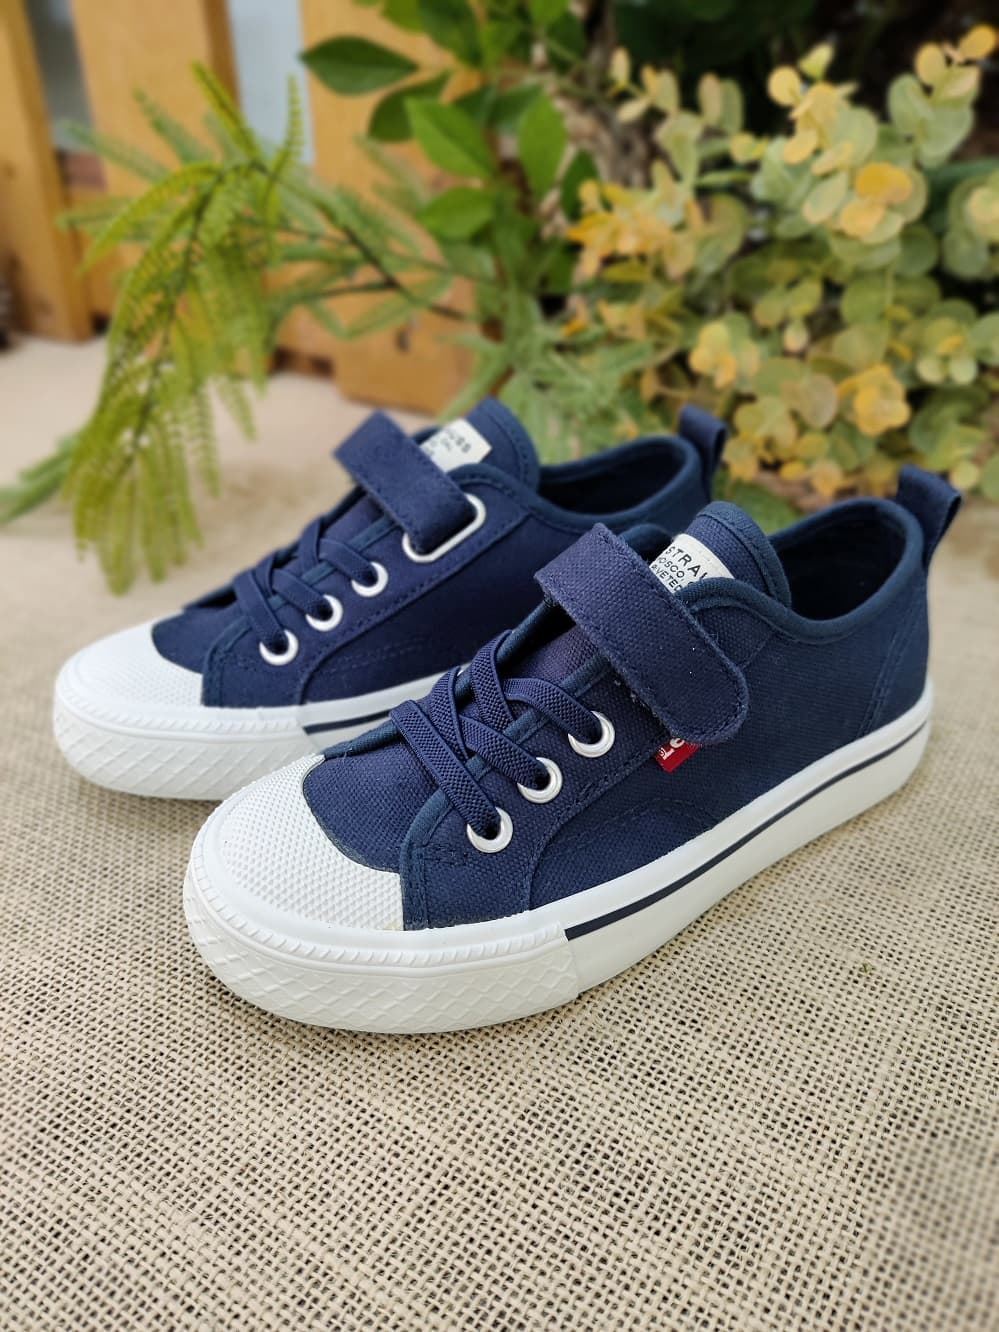 Levi's Unisex Kids Navy Blue Canvas Sneakers - Image 5